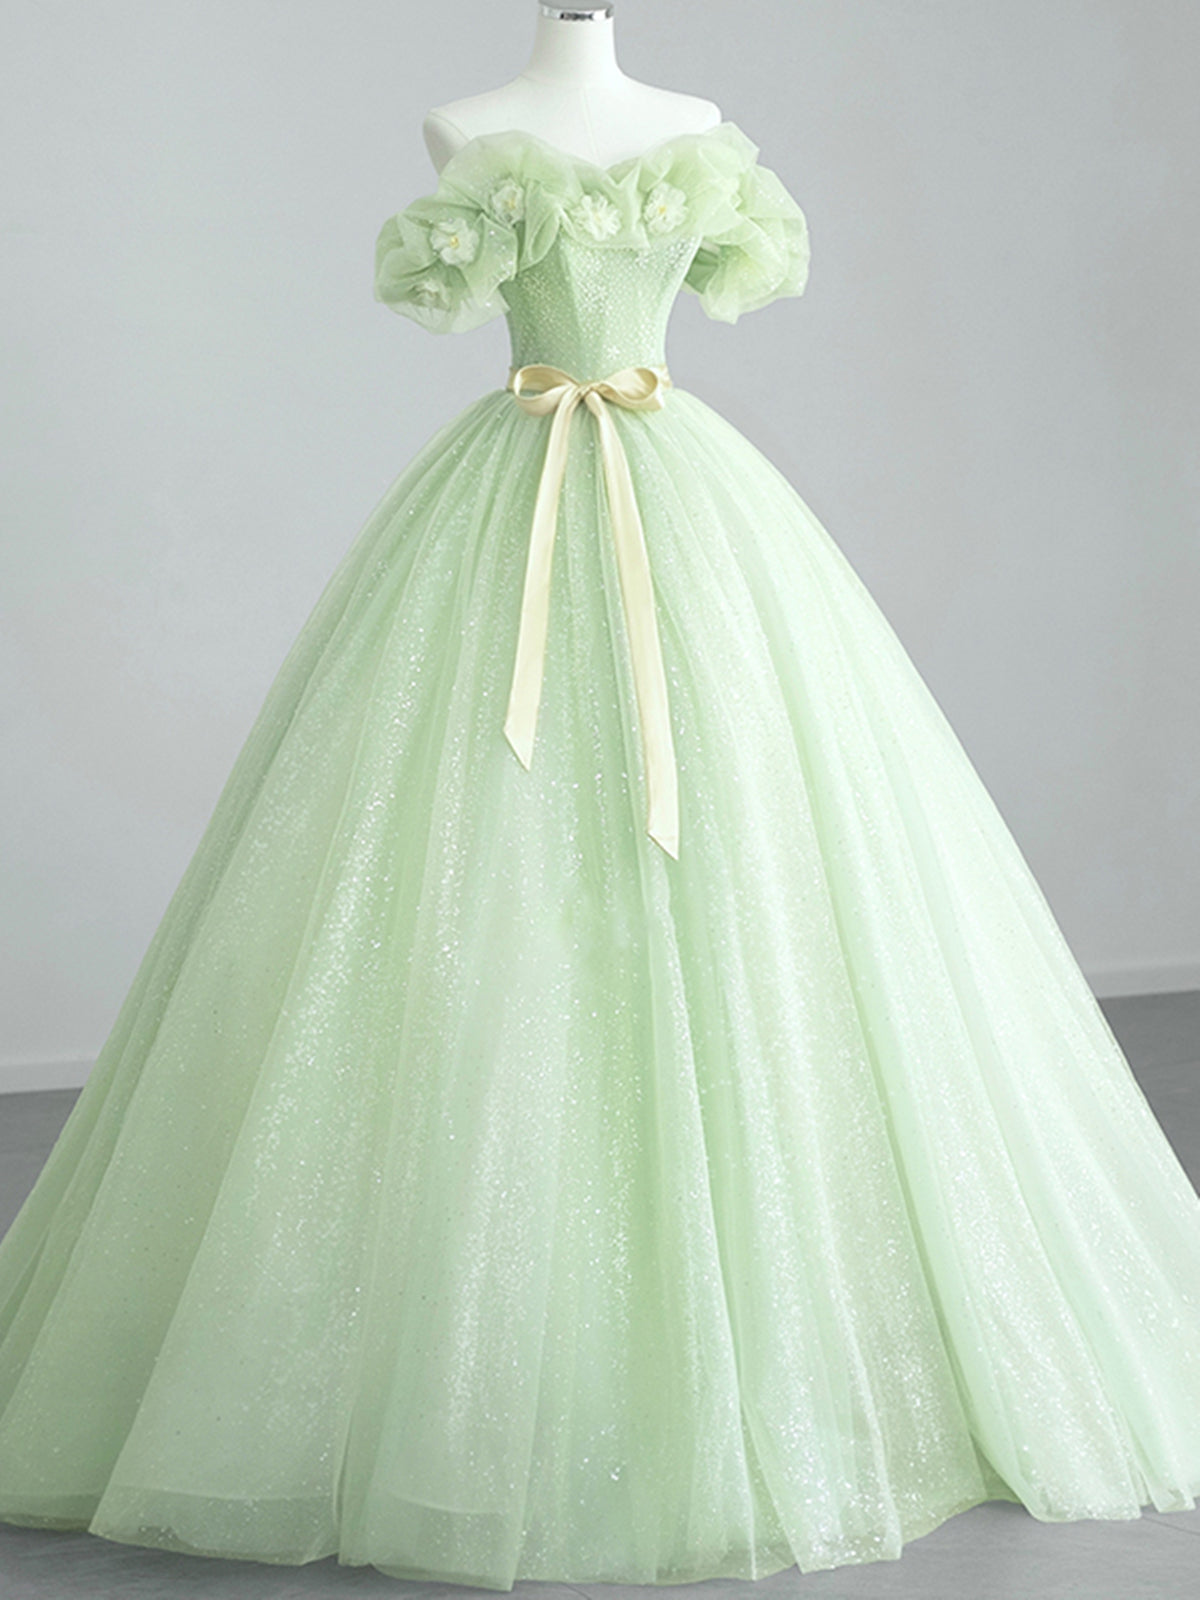 Off the Shoulder Light Green Floral Corset Prom Dresses, Green Floral Corset Formal Graduation Dress outfits, Winter Wedding